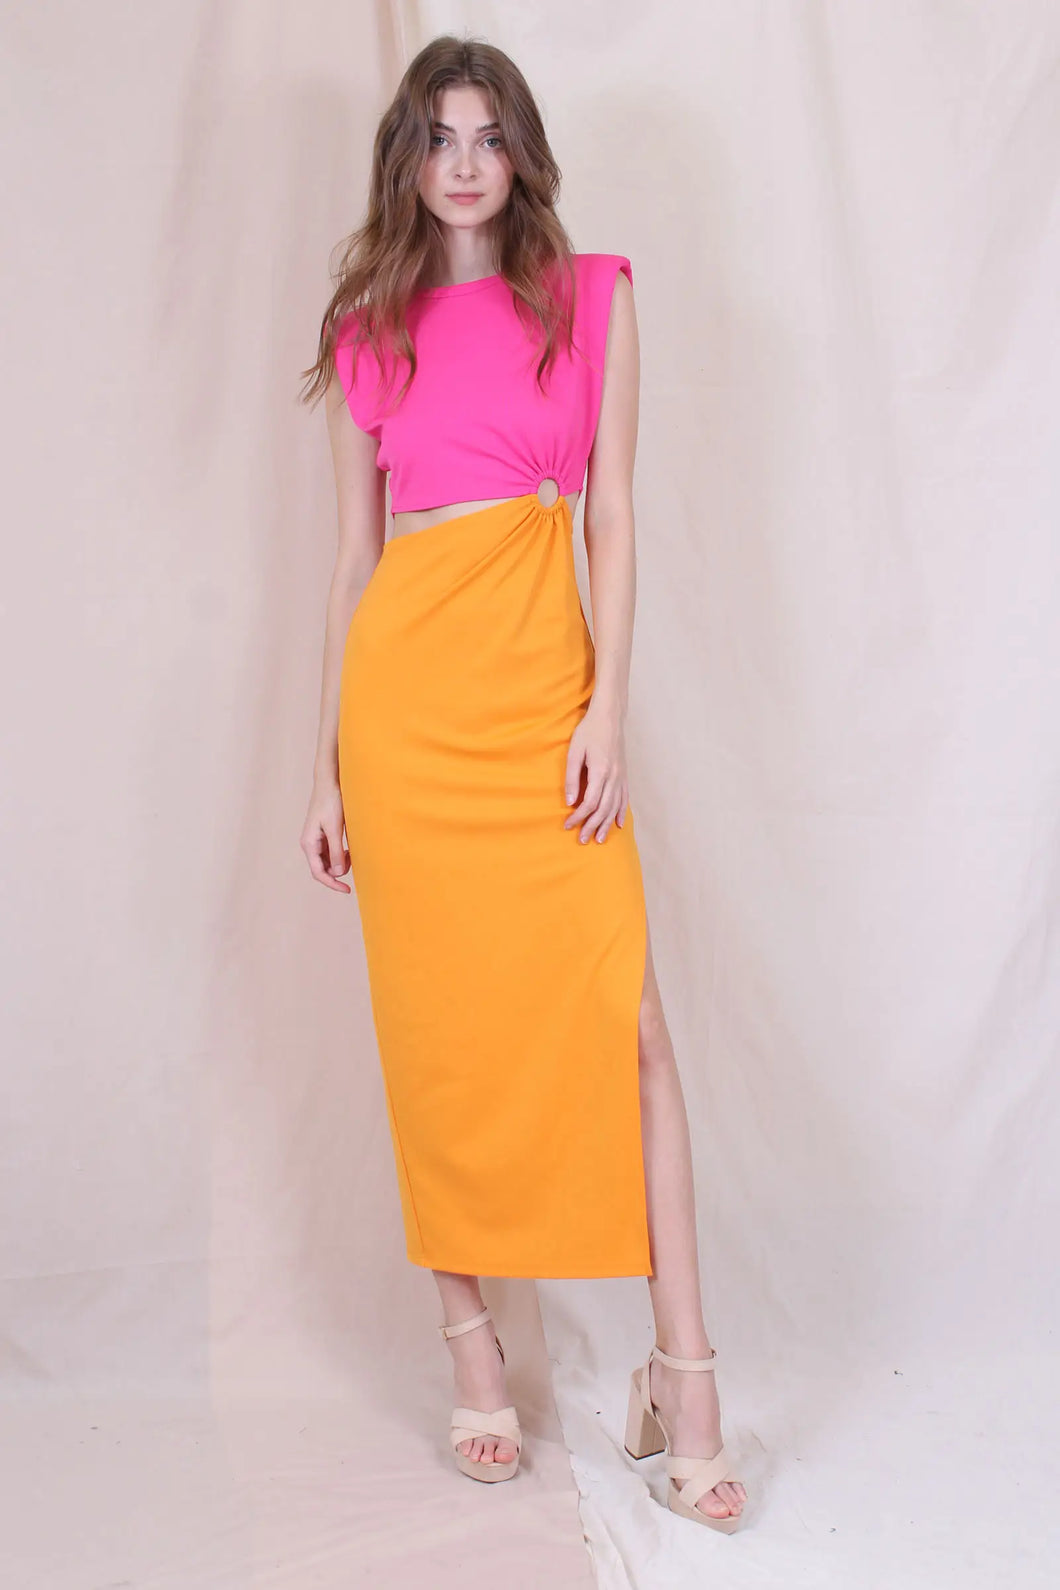 SAMPLE, Color Block Cut Out Maxi Dress - Hot Pink/Apricot